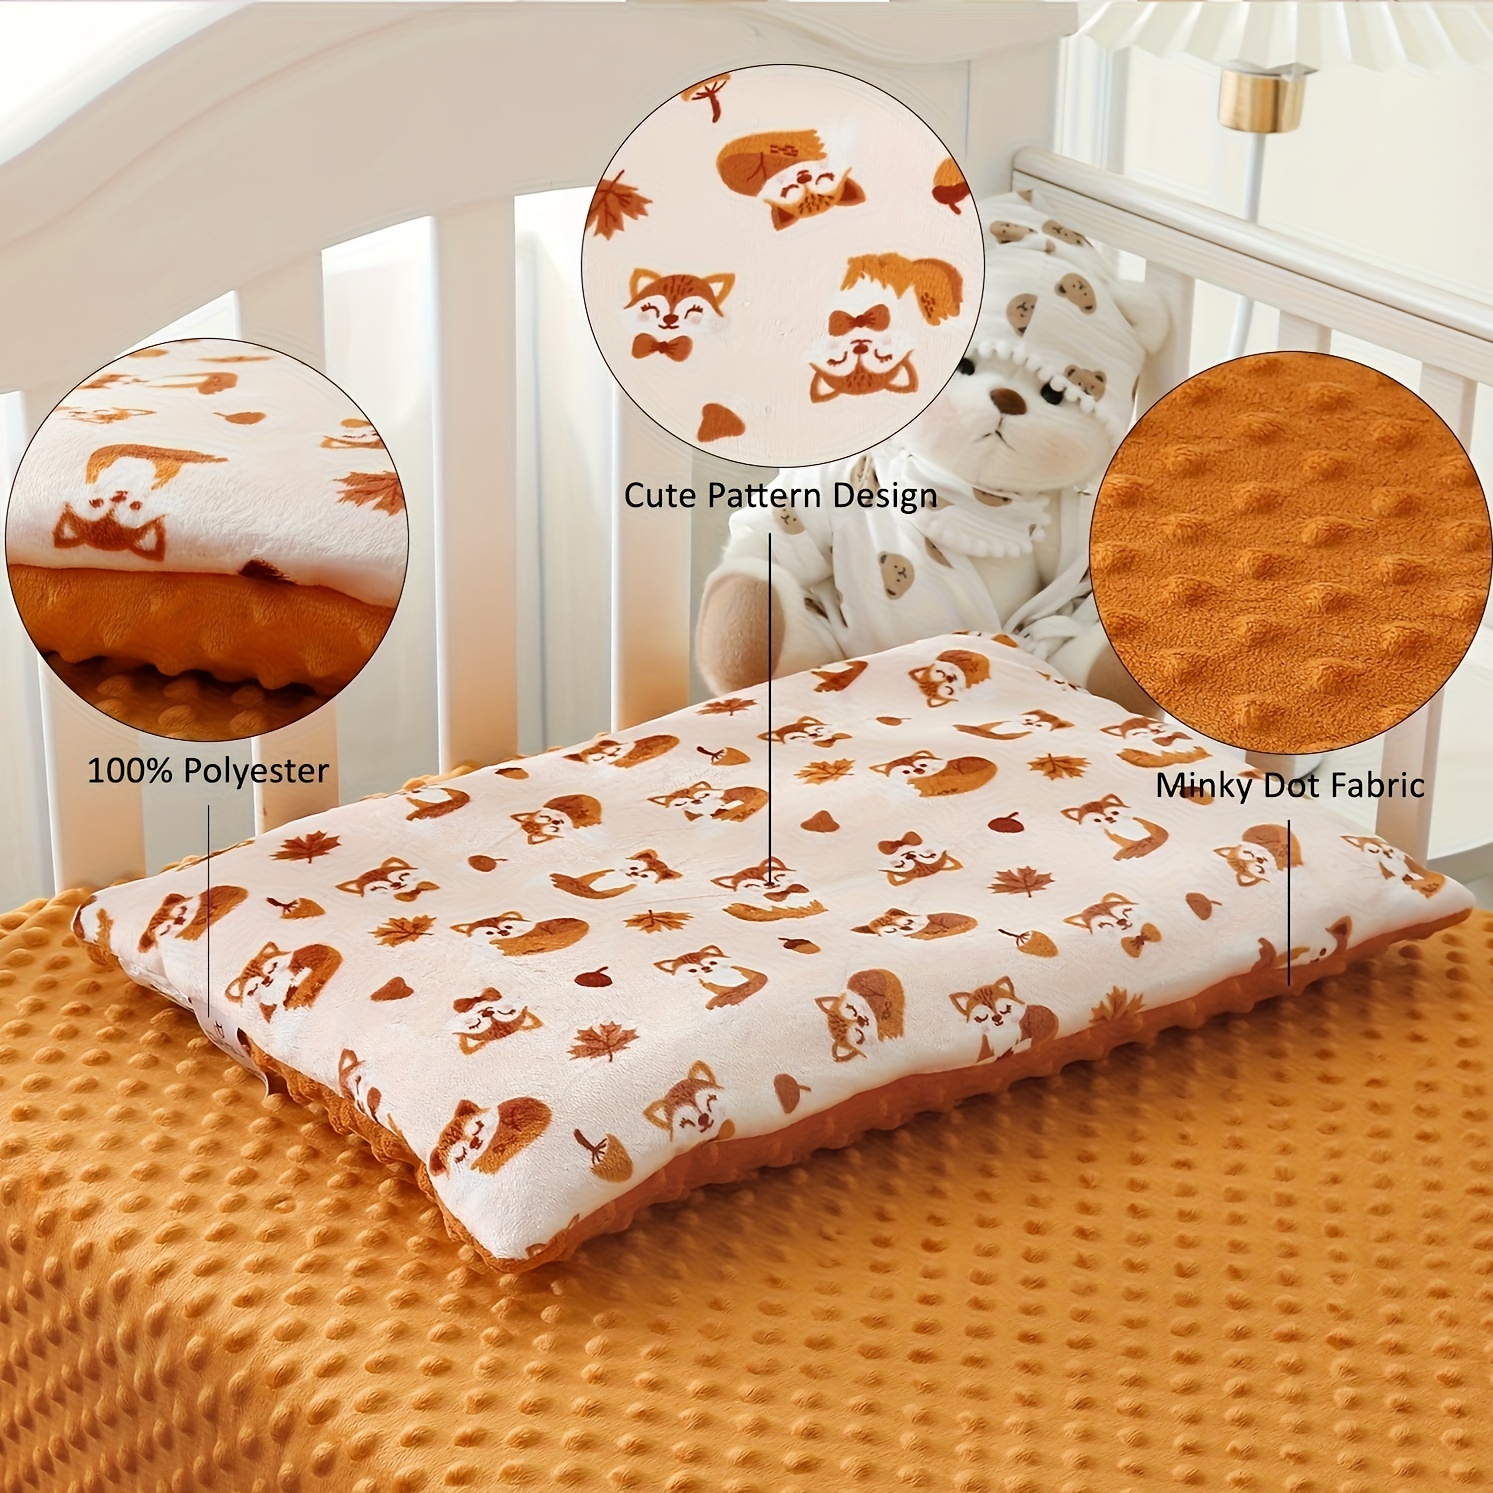 

Ultra-soft Plush Pillow, Minky Dot Fabric With Cute Animal Pattern Design, 19"x 13